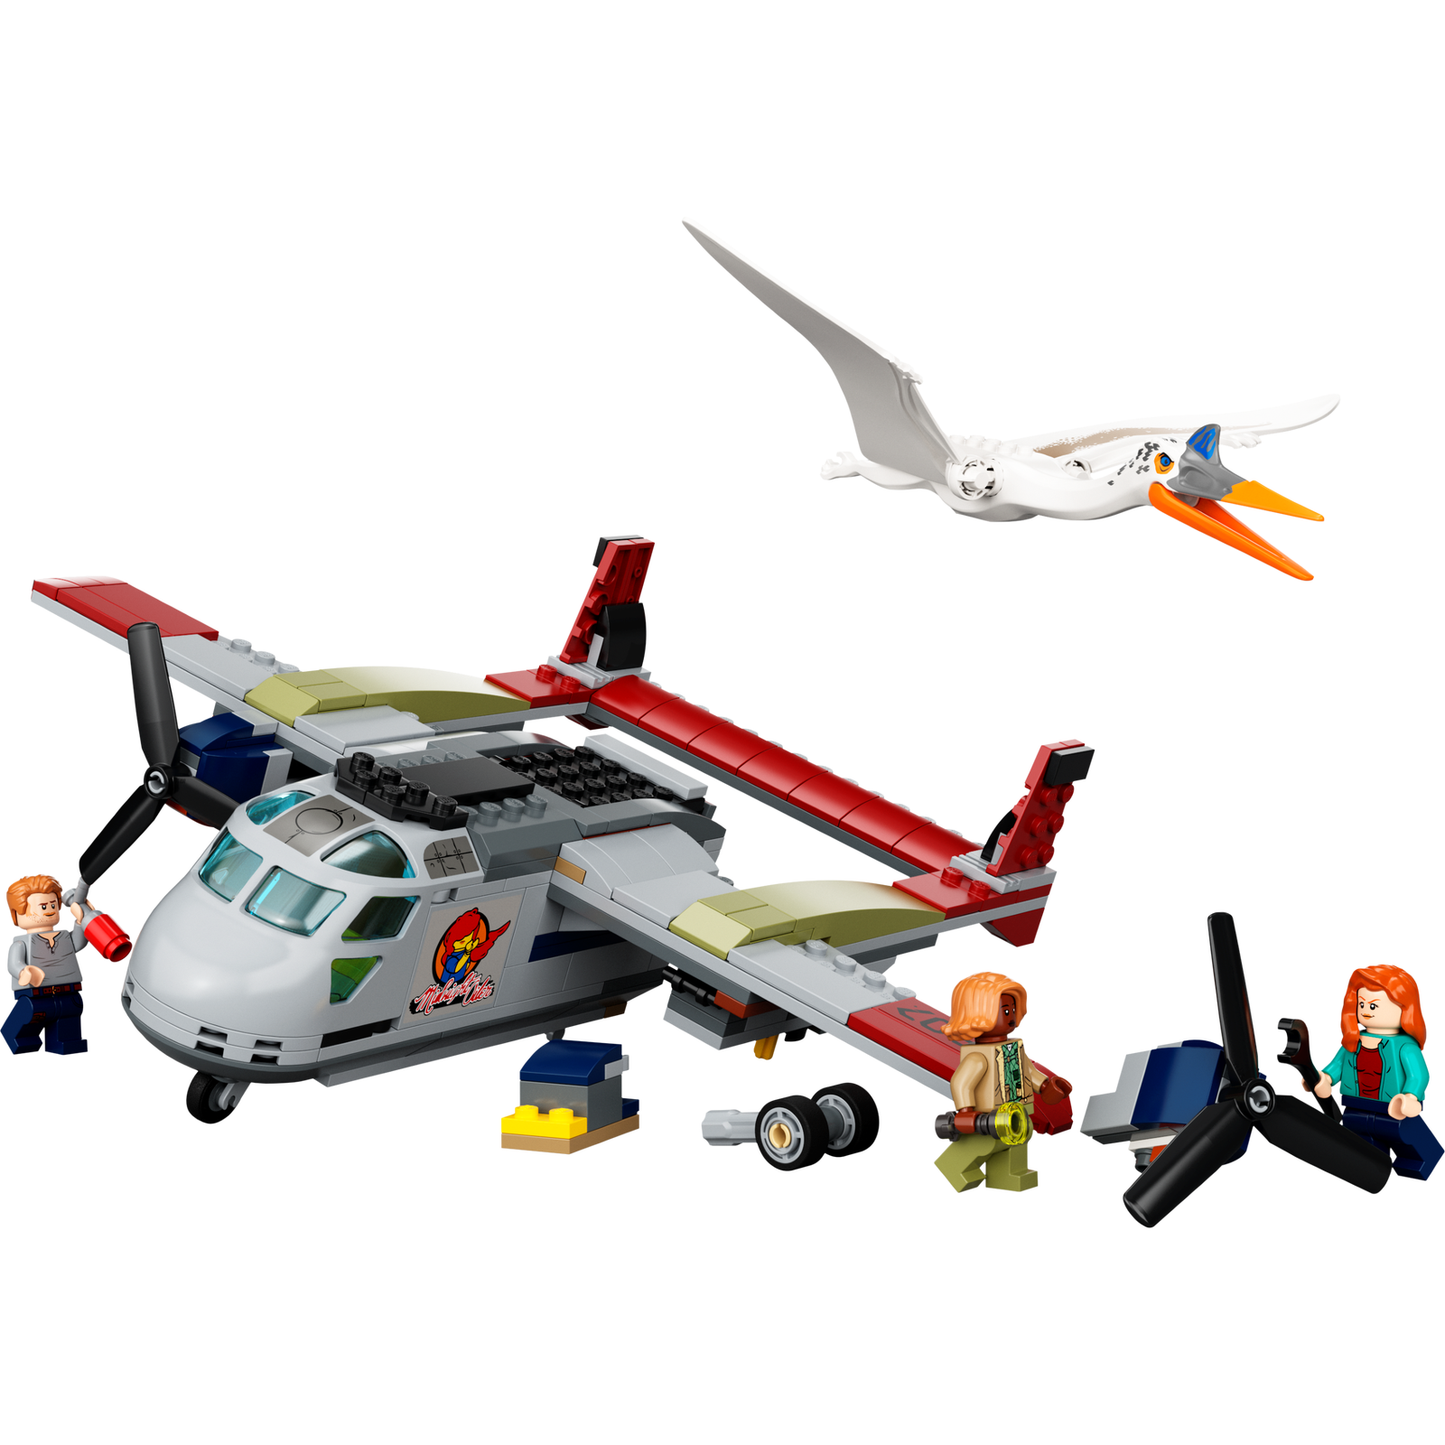 Lego Jurassic World Dominion Quetzalcoatlus Plane Ambush